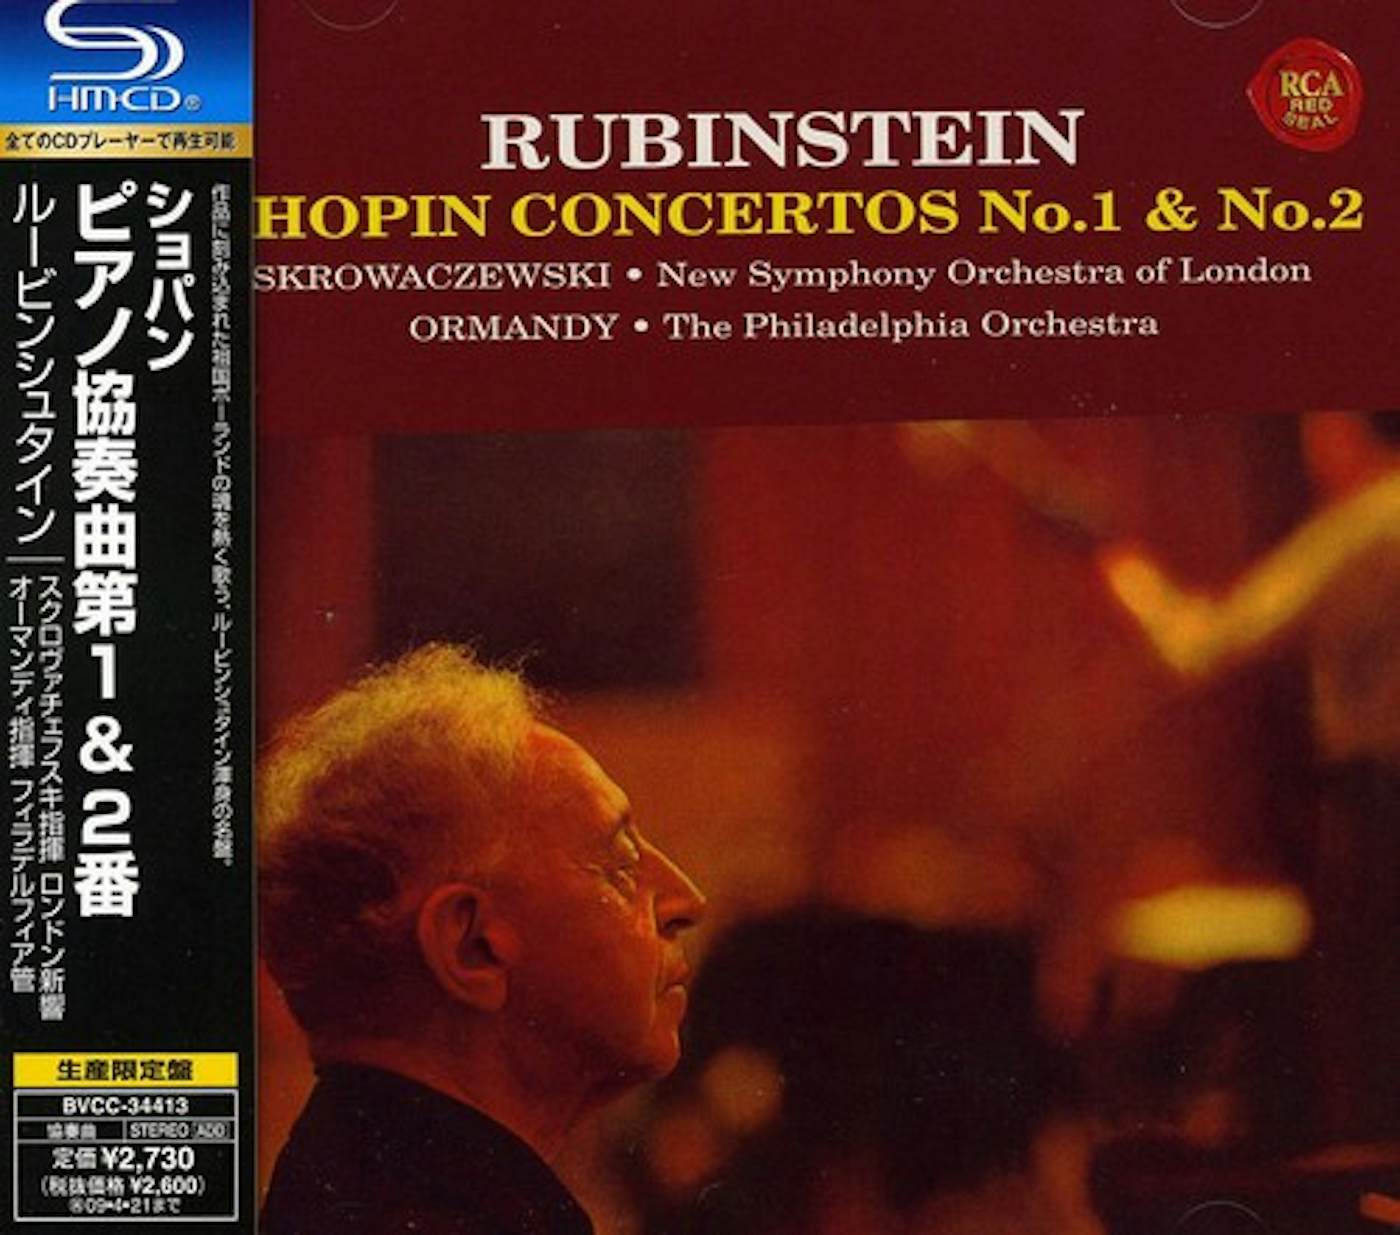 Arthur Rubinstein Plays Grieg's Piano Concerto at 88